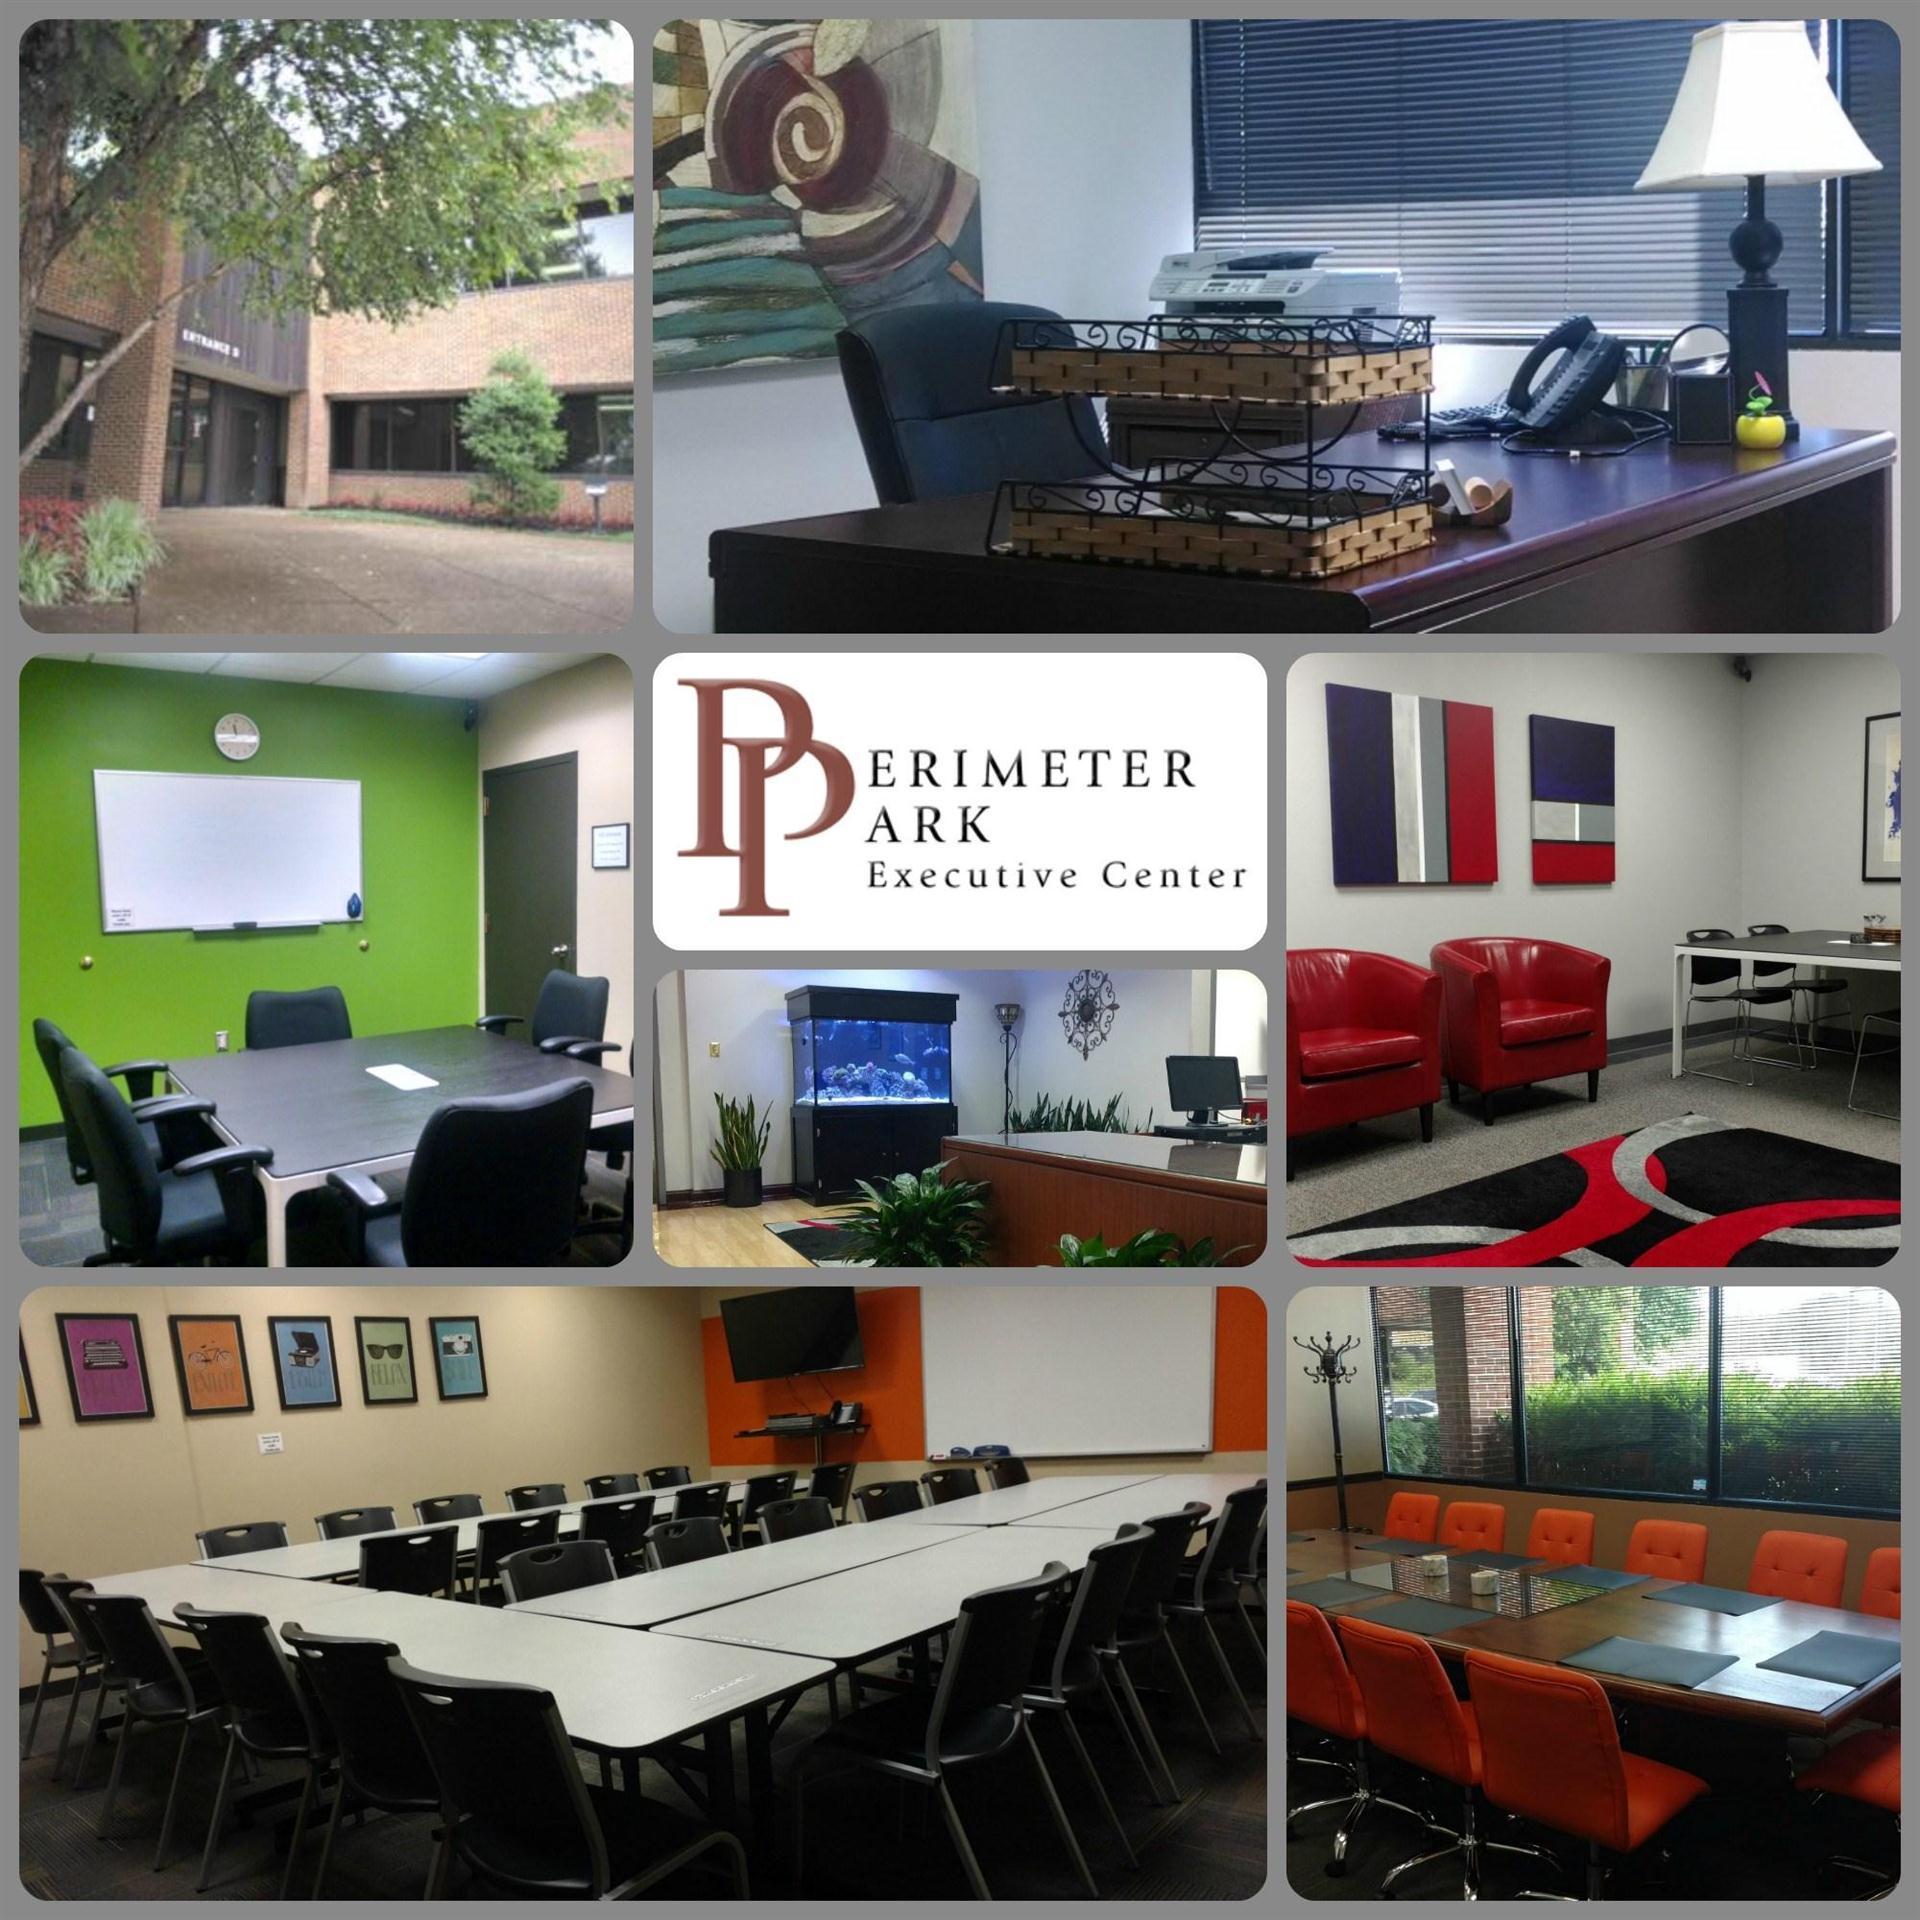 Perimeter Park Executive Center in Nashville, TN